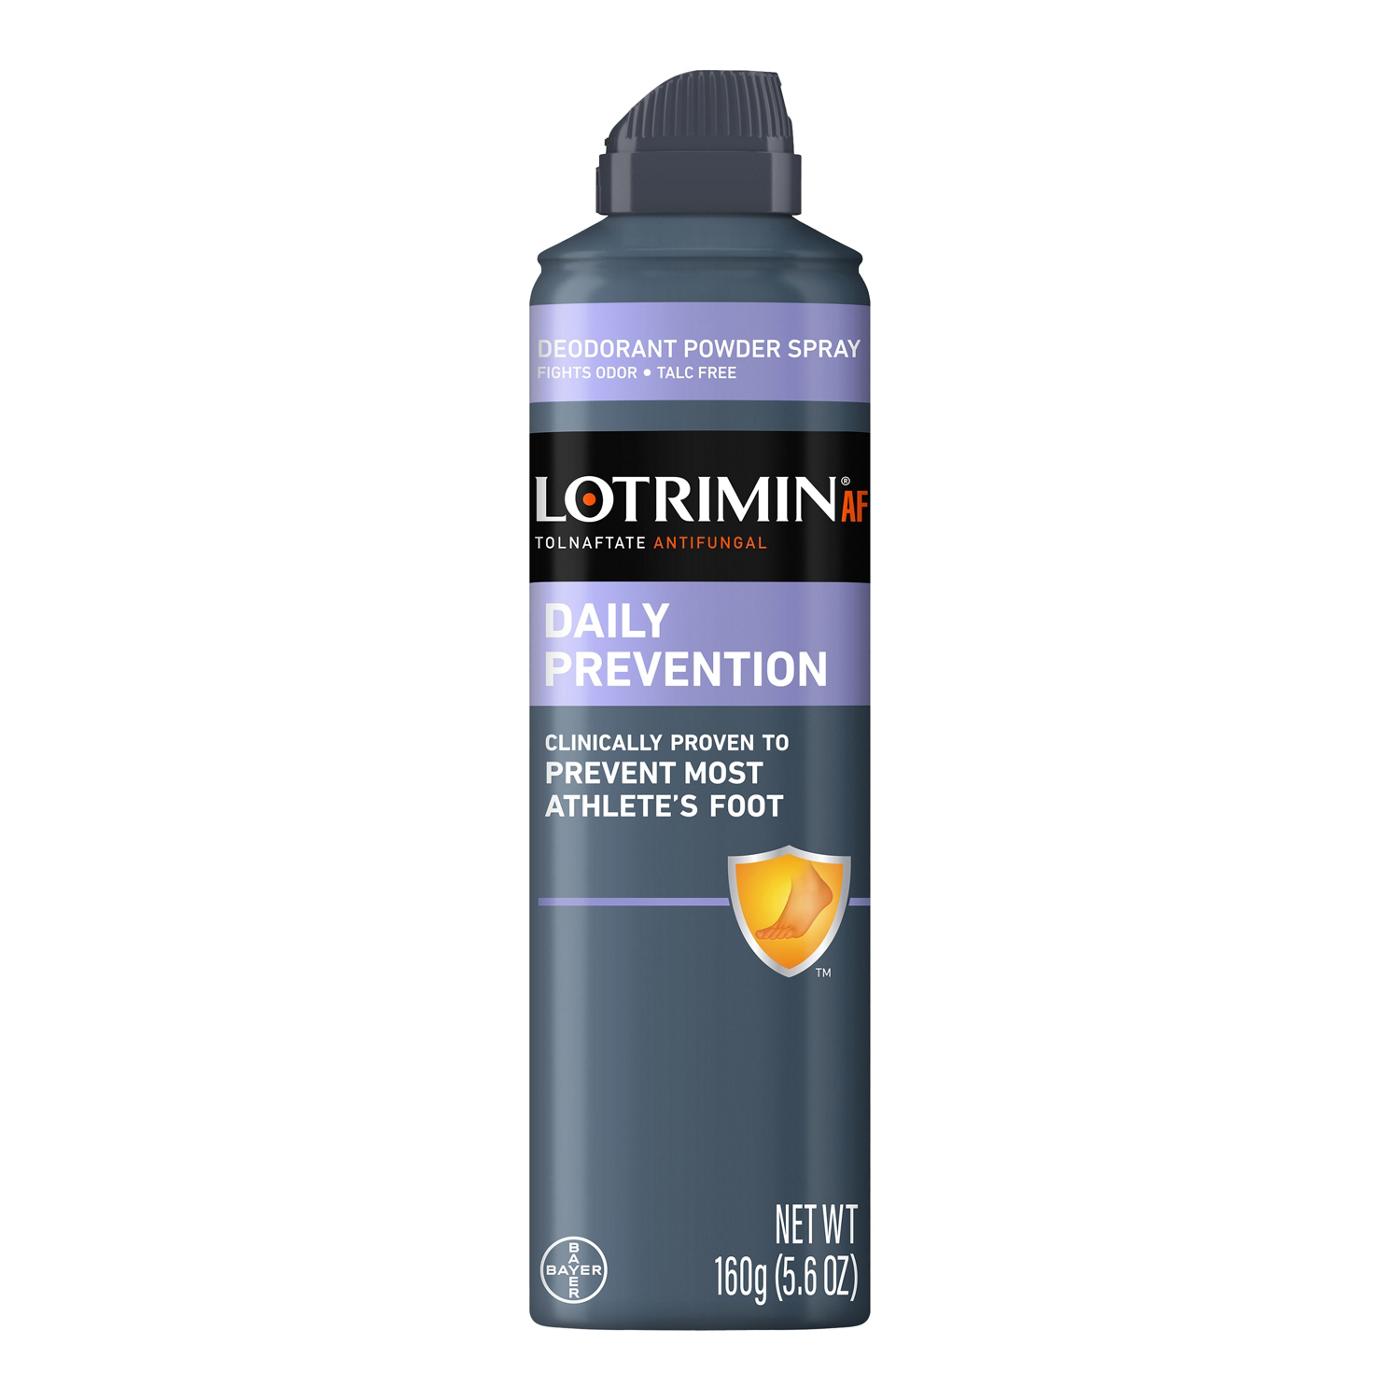 Lotrimin Daily Prevention Deodorant Powder Spray; image 1 of 3